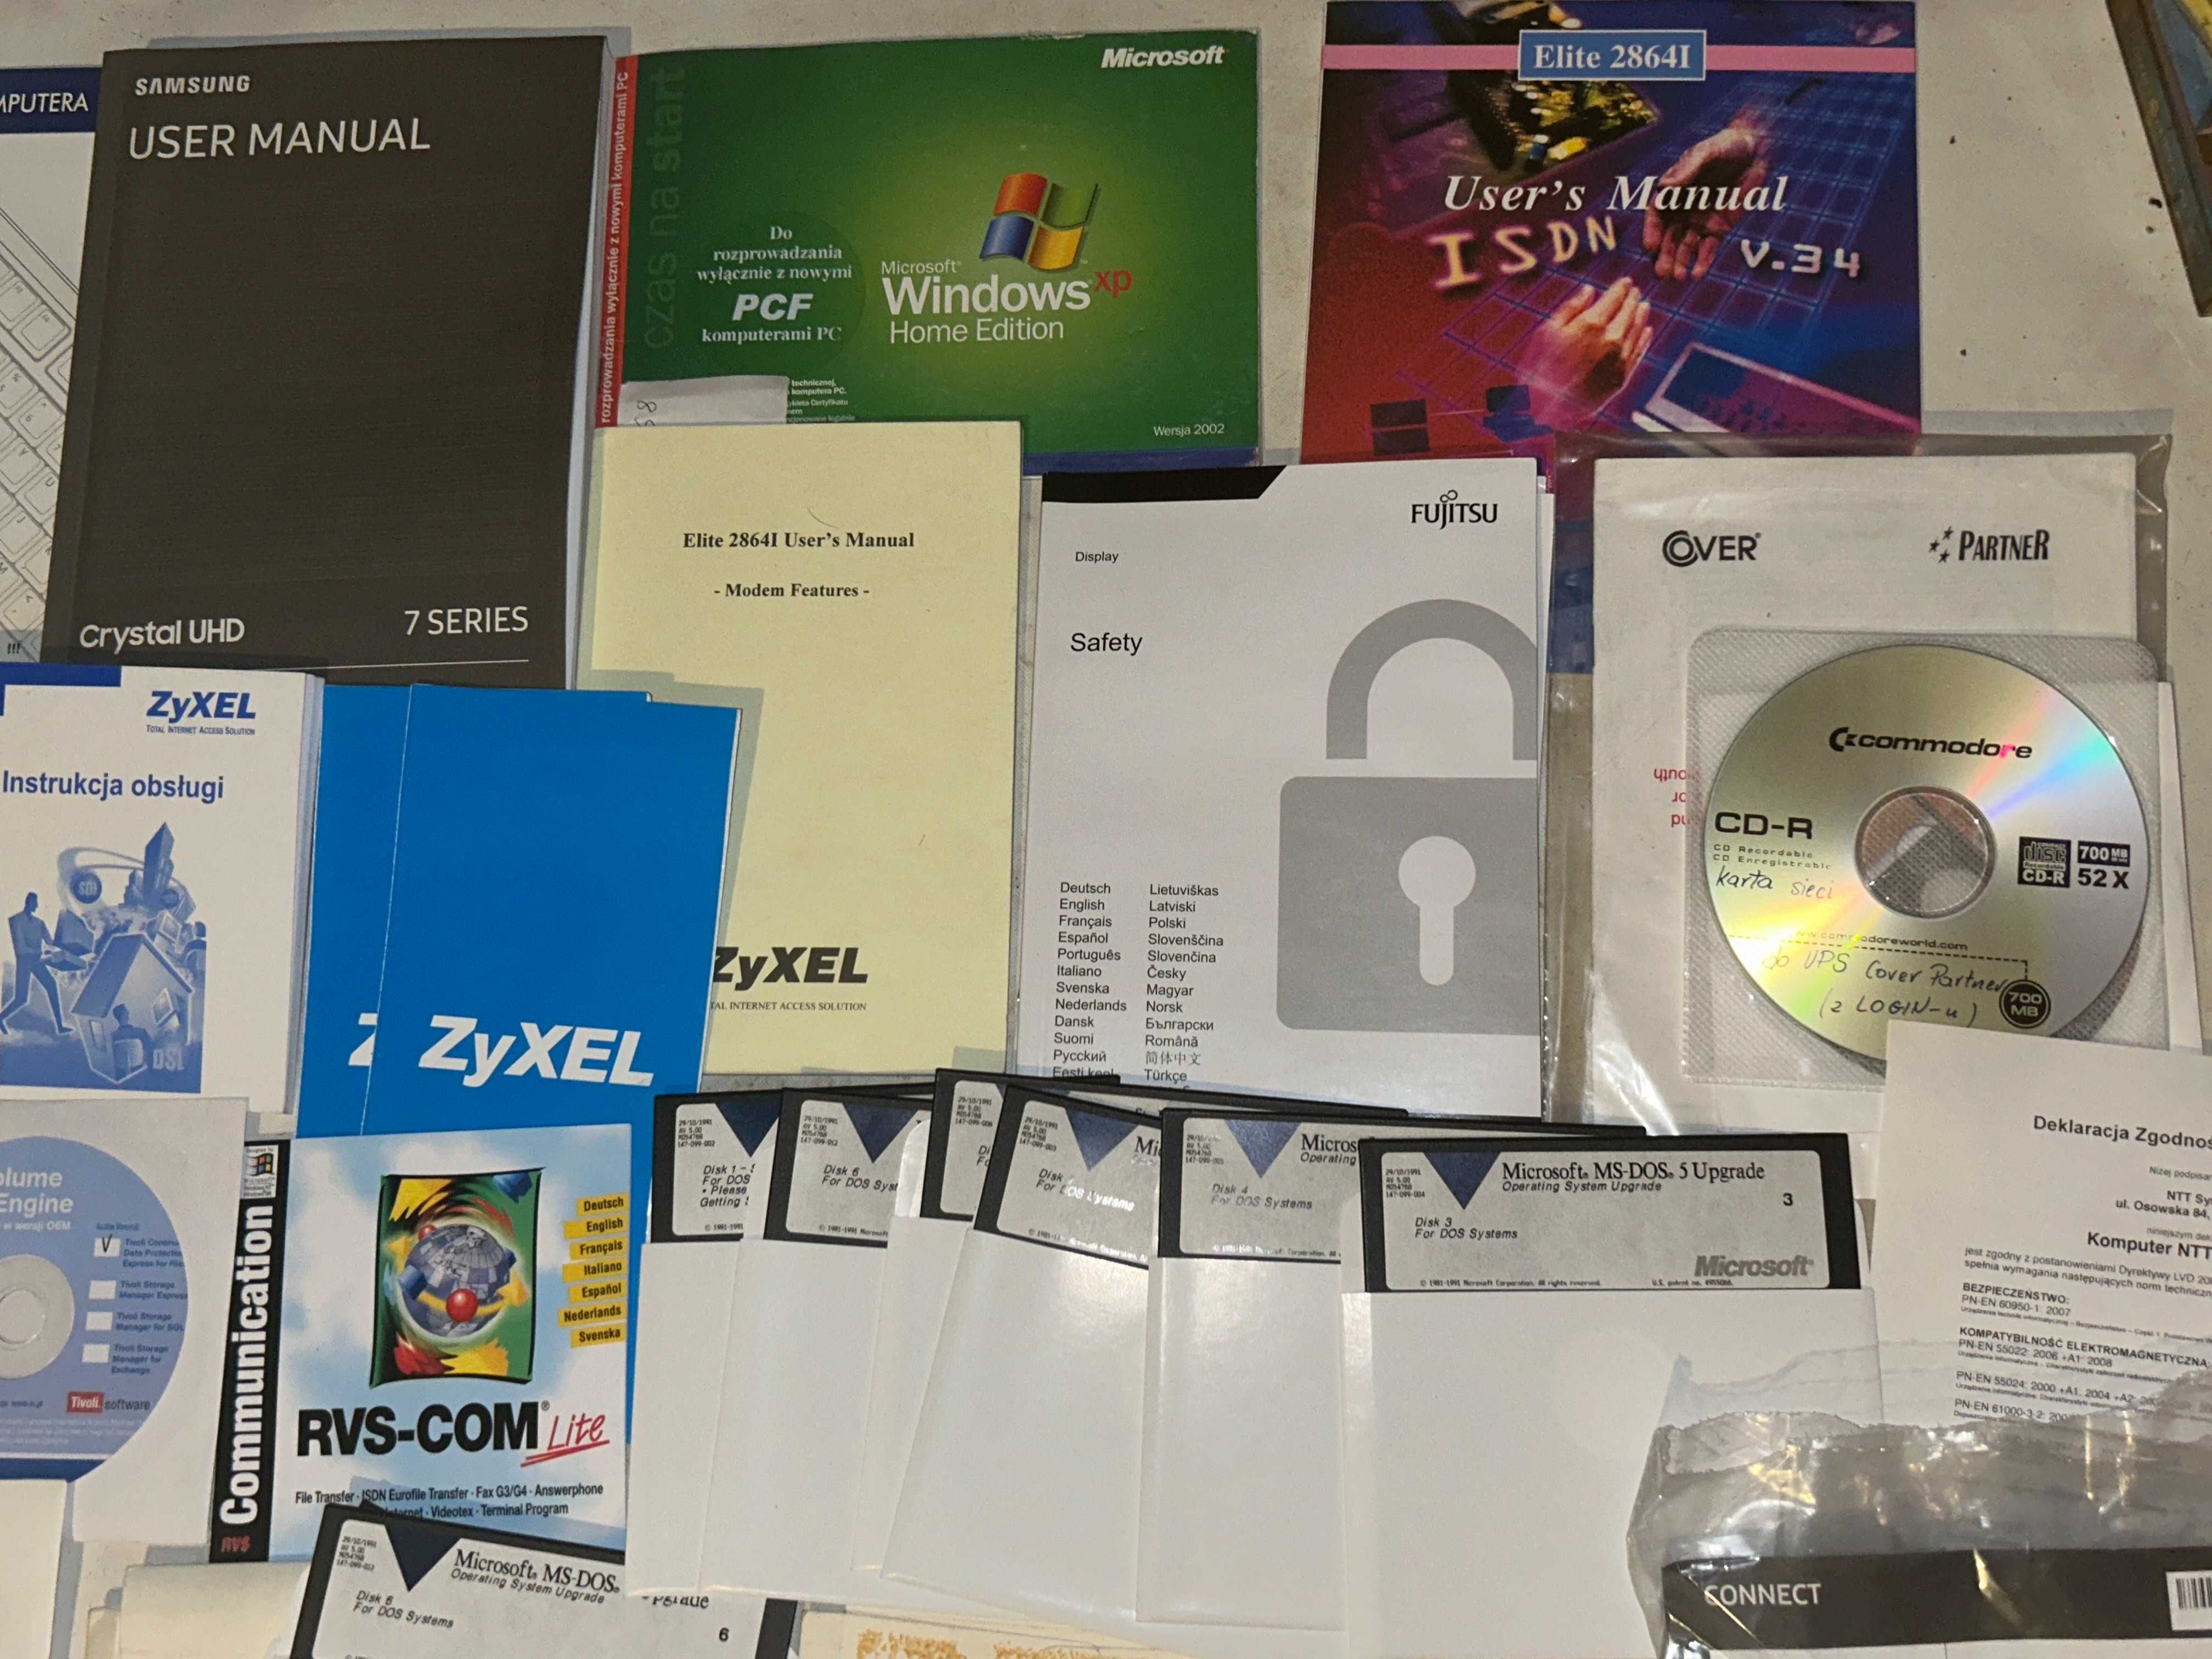 Płyty,instrukcje,dyski MS-DOS,Gigabyte,NTT,Samsung,IBM